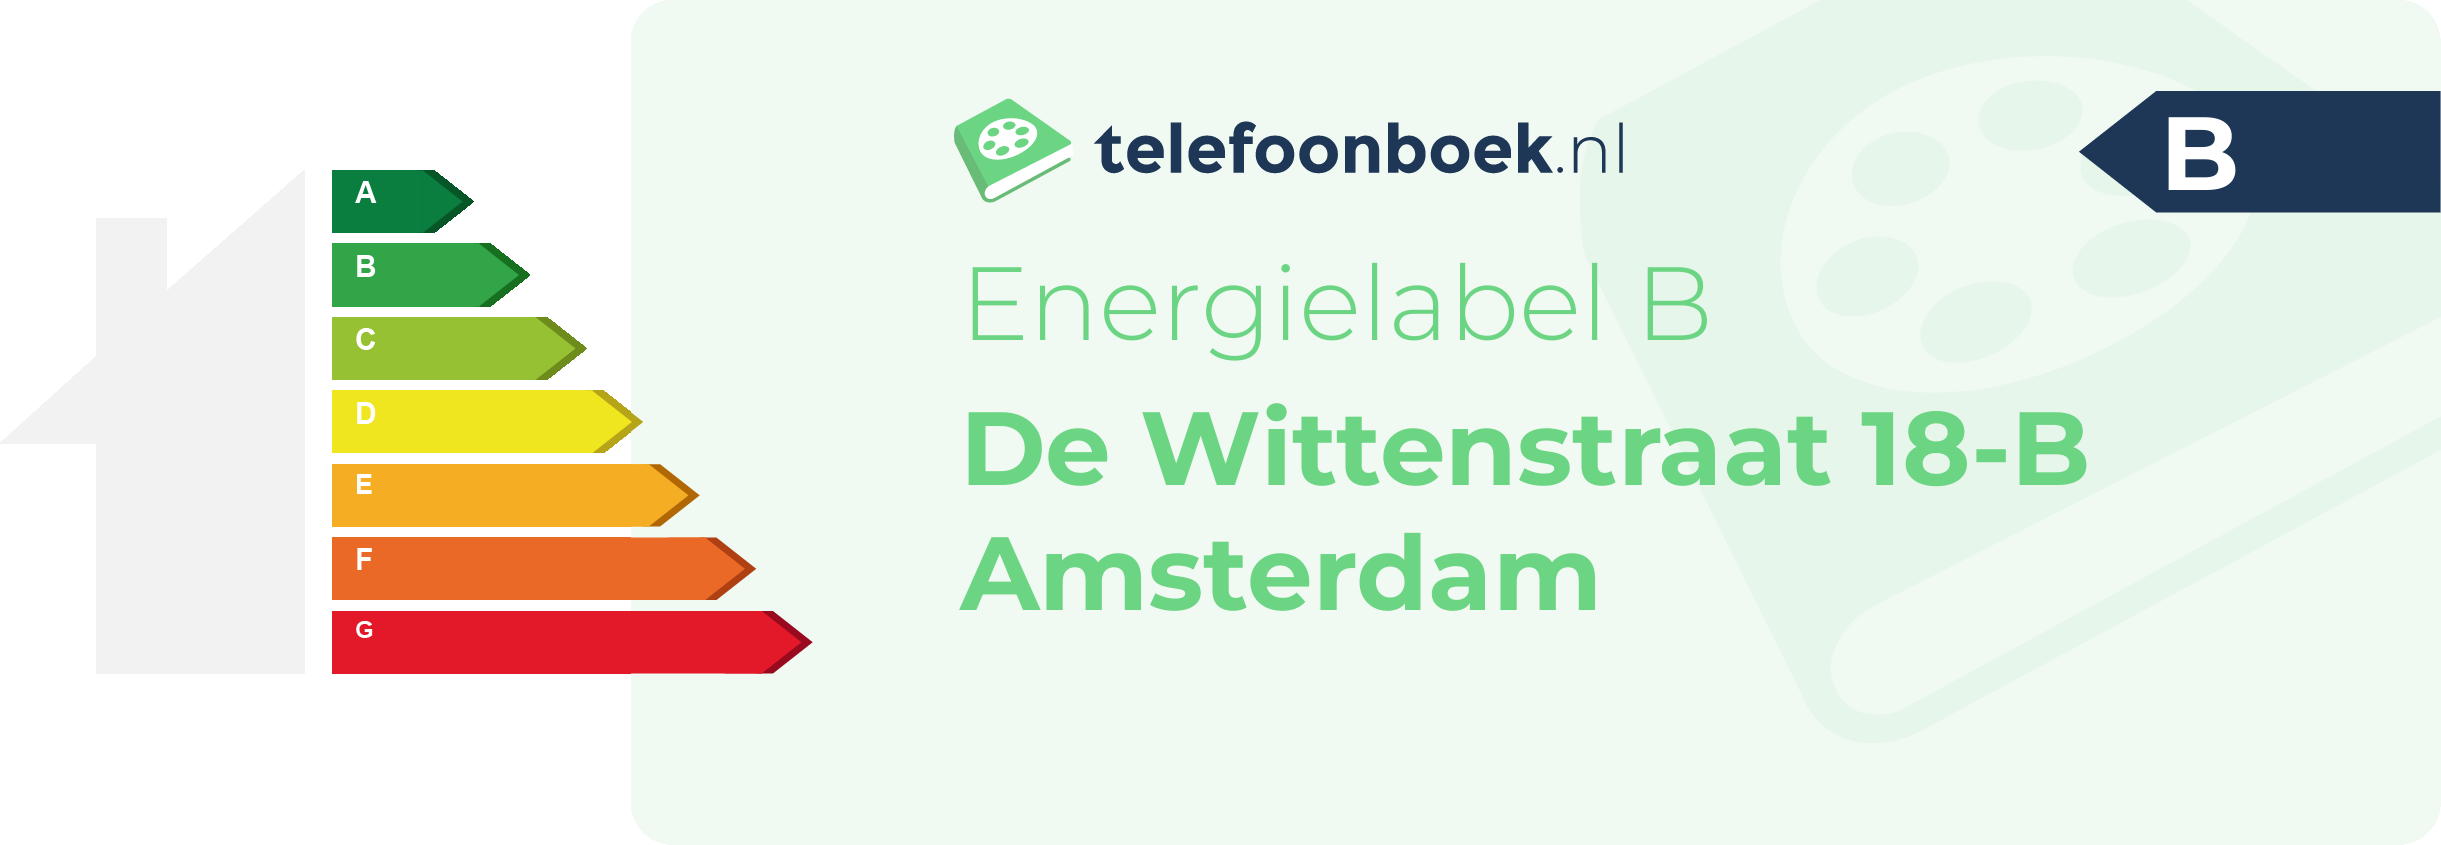 Energielabel De Wittenstraat 18-B Amsterdam